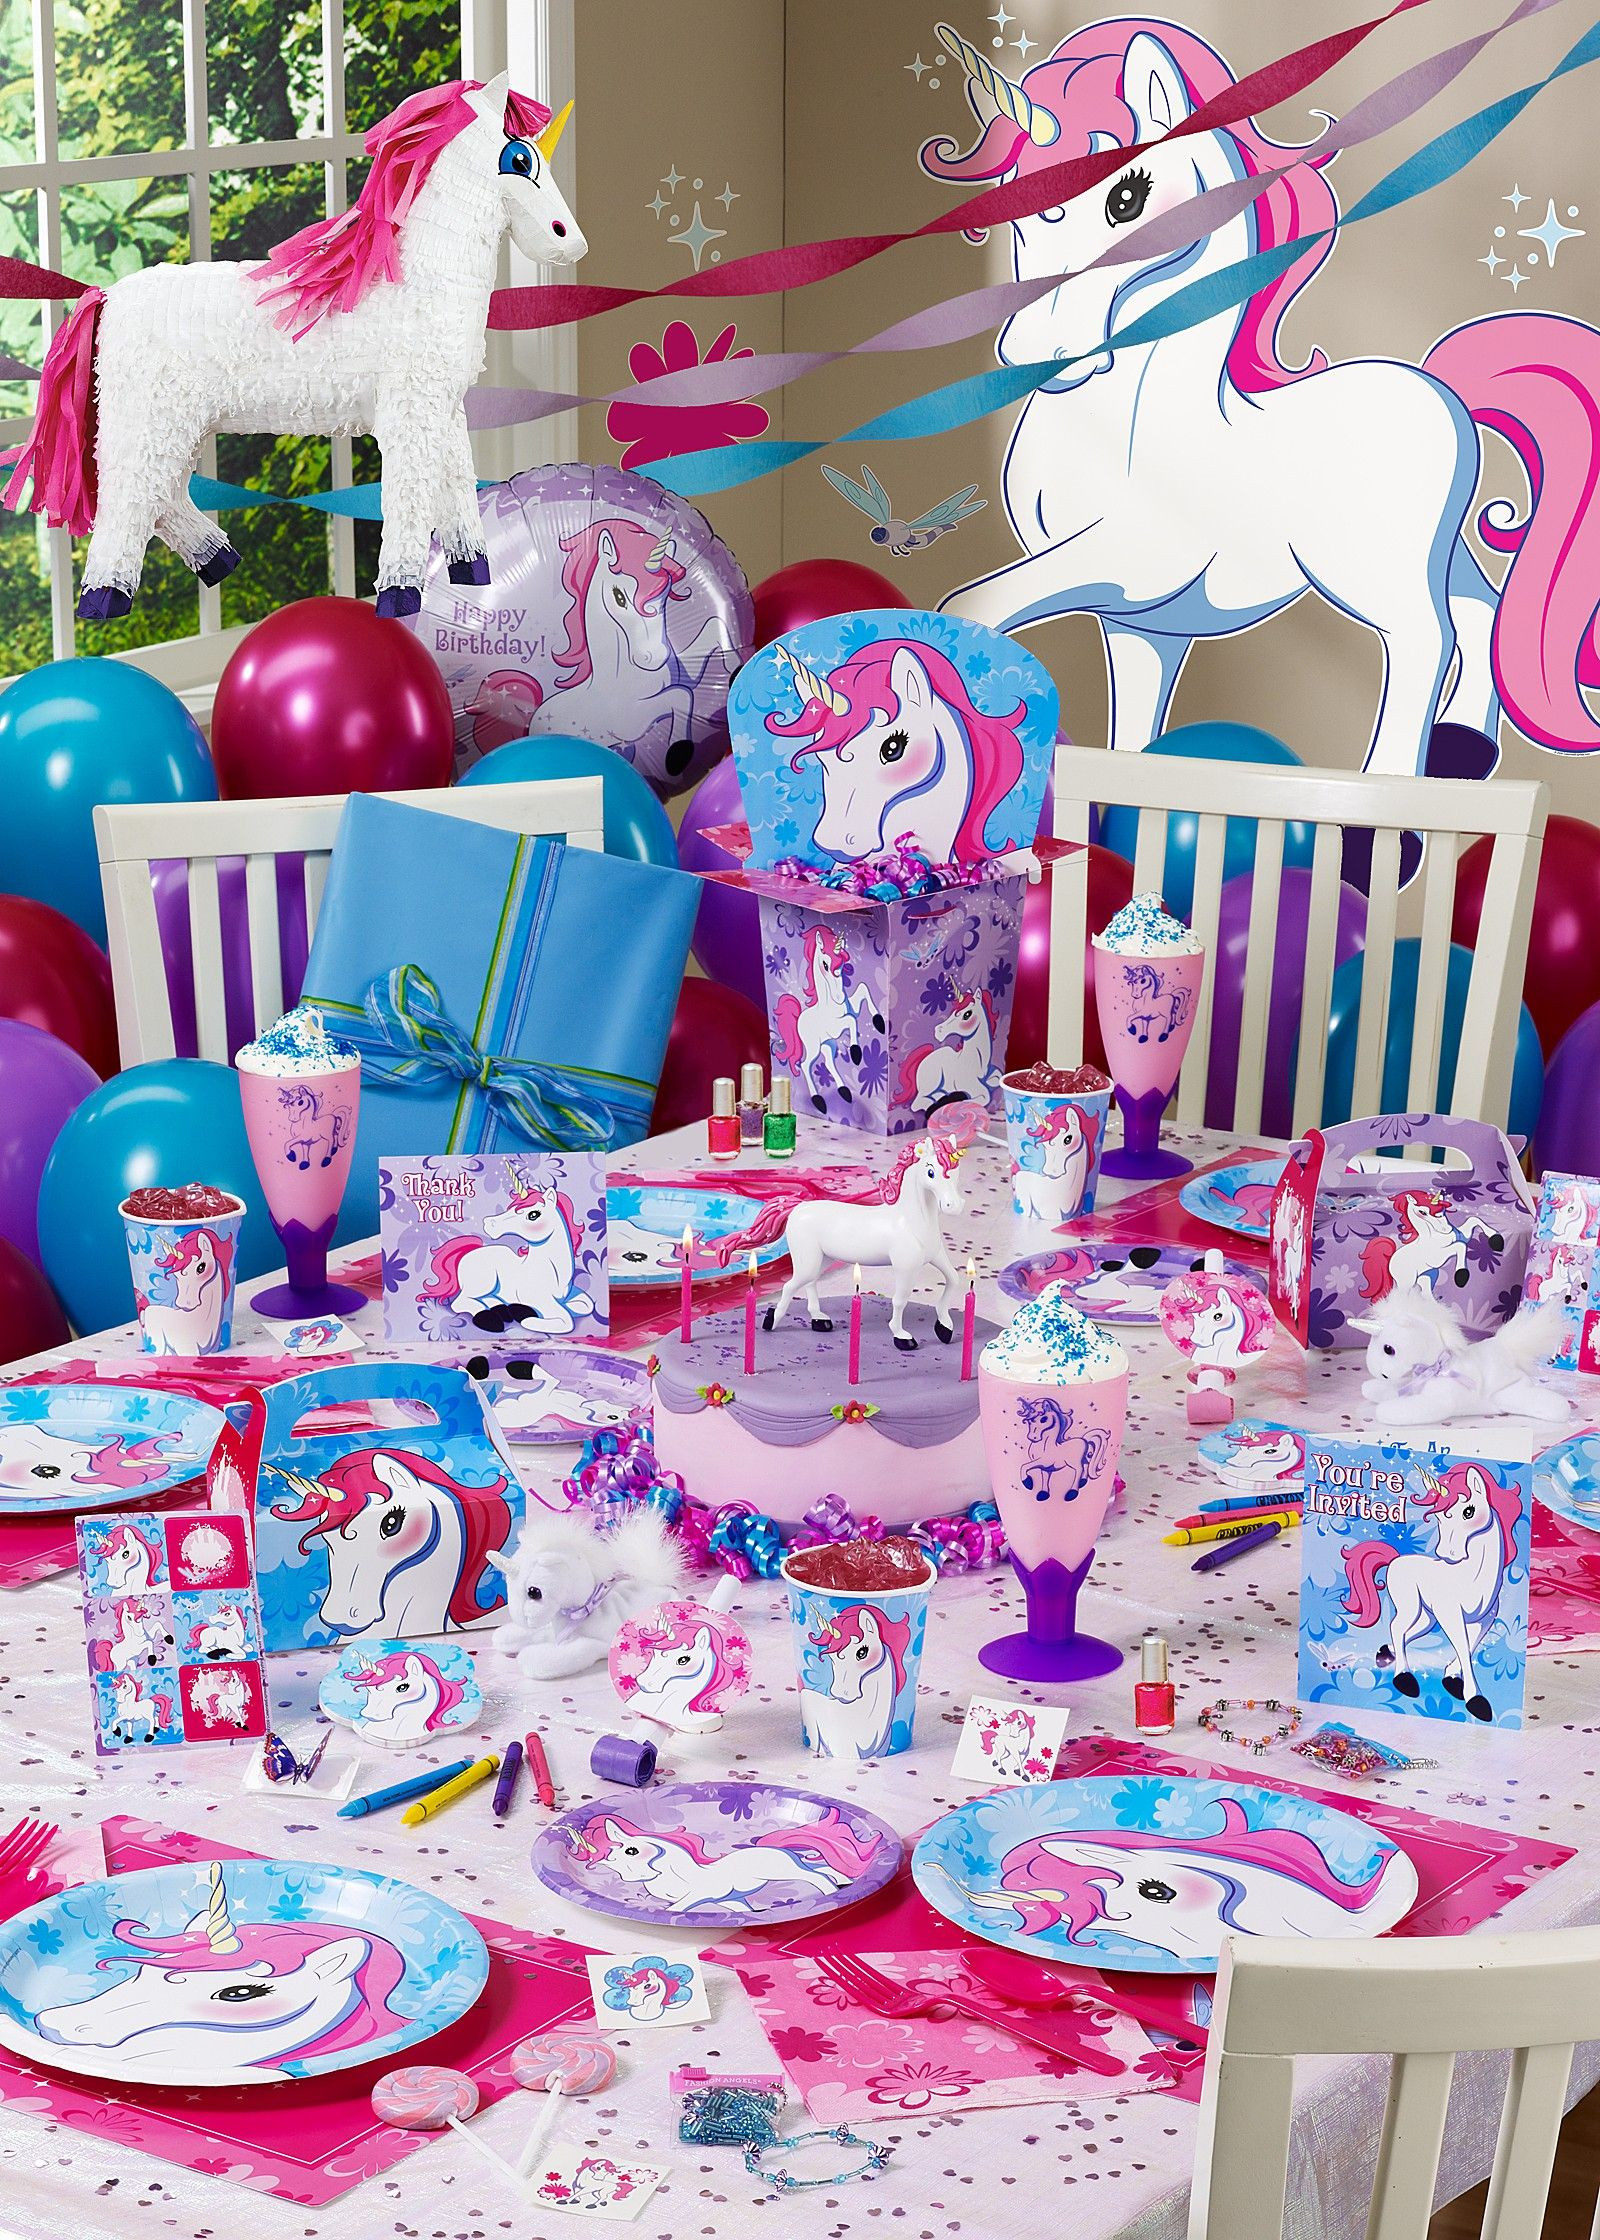 Best ideas about Birthday Party Kits
. Save or Pin Veeeeean karenondskan hojaldraoficial la primera fiesta Now.